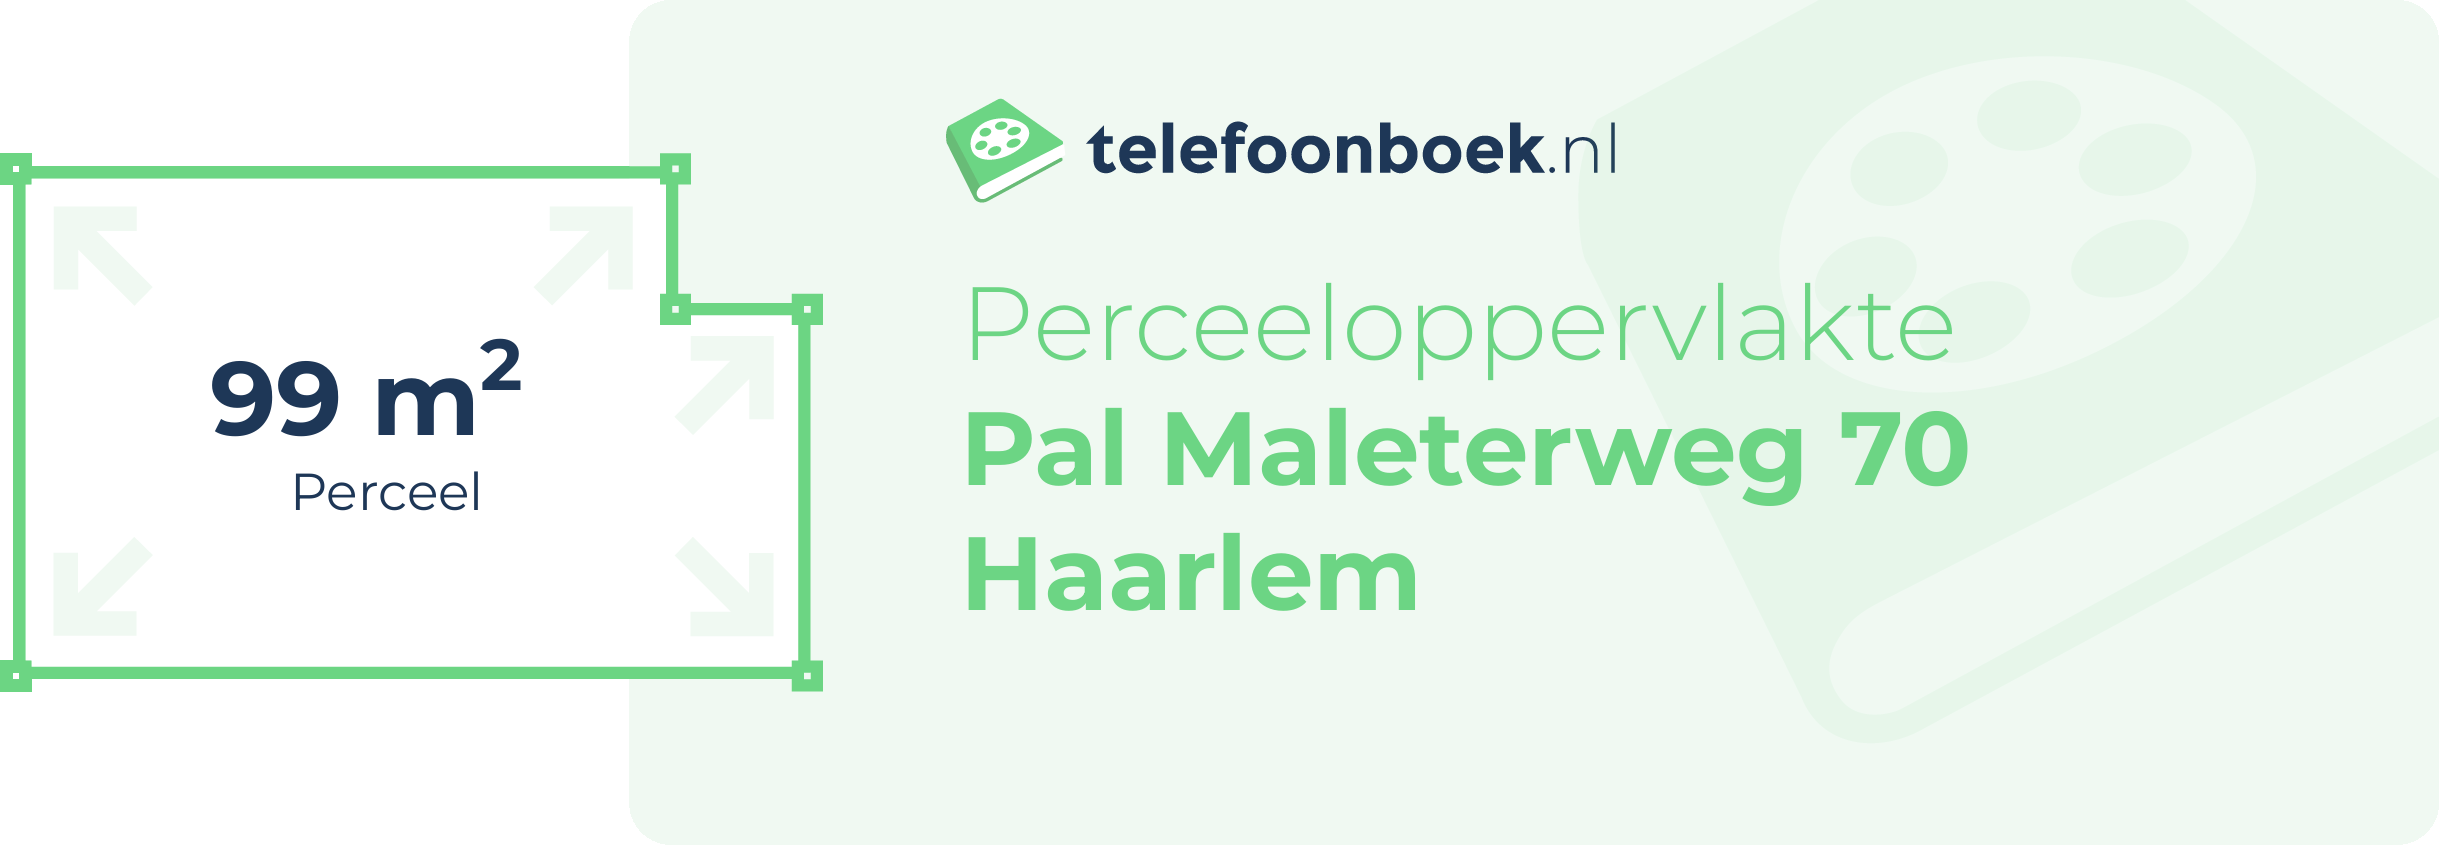 Perceeloppervlakte Pal Maleterweg 70 Haarlem